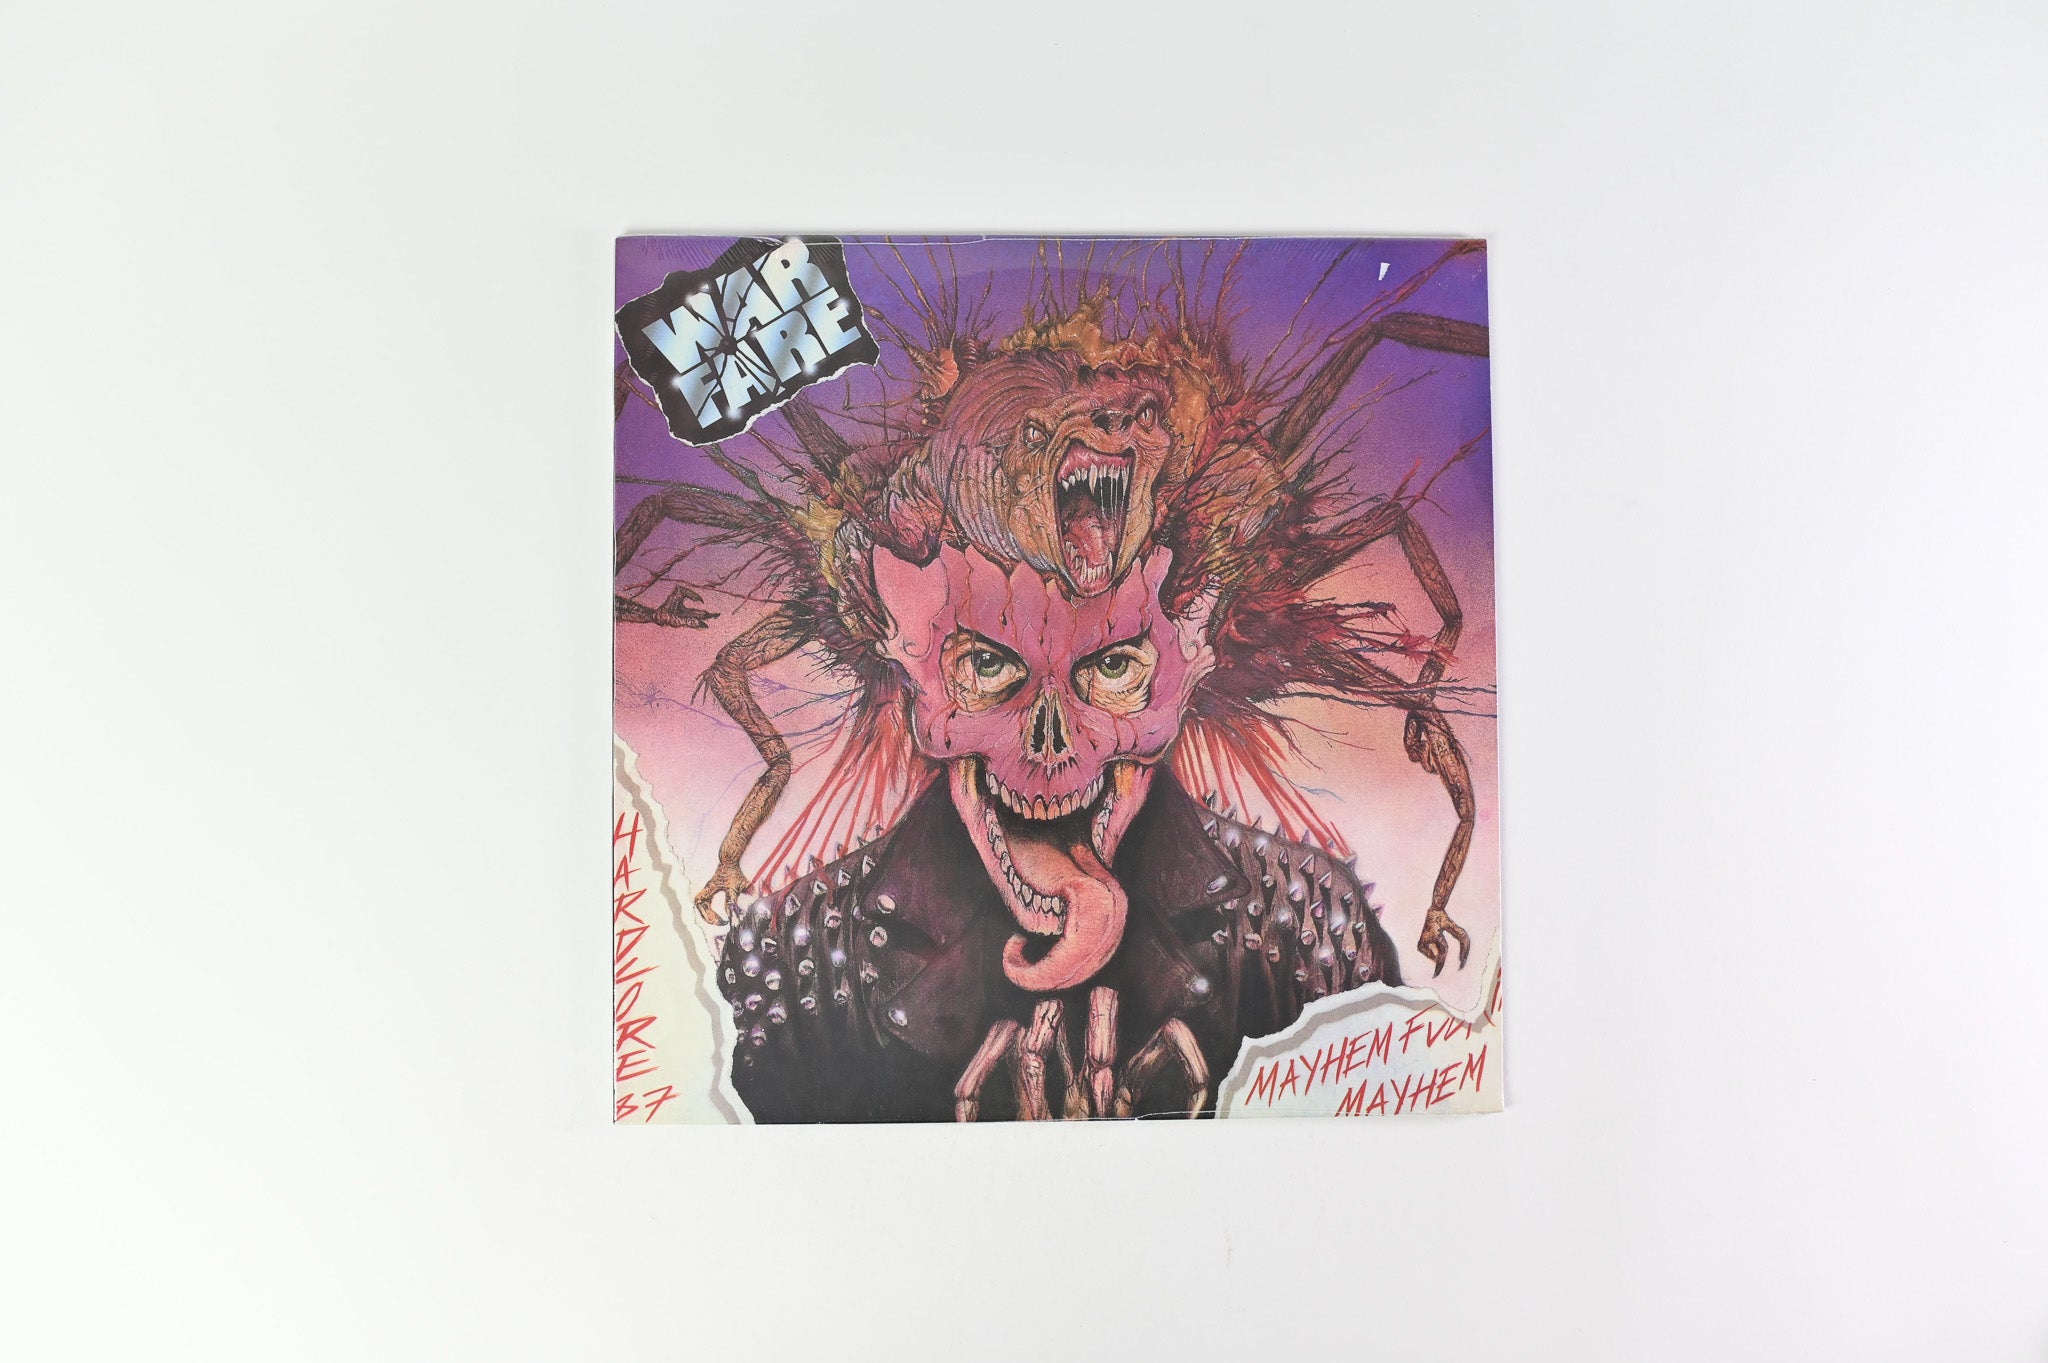 Warfare - Mayhem Fuckin' Mayhem on Back On Black - Sealed Purple Vinyl